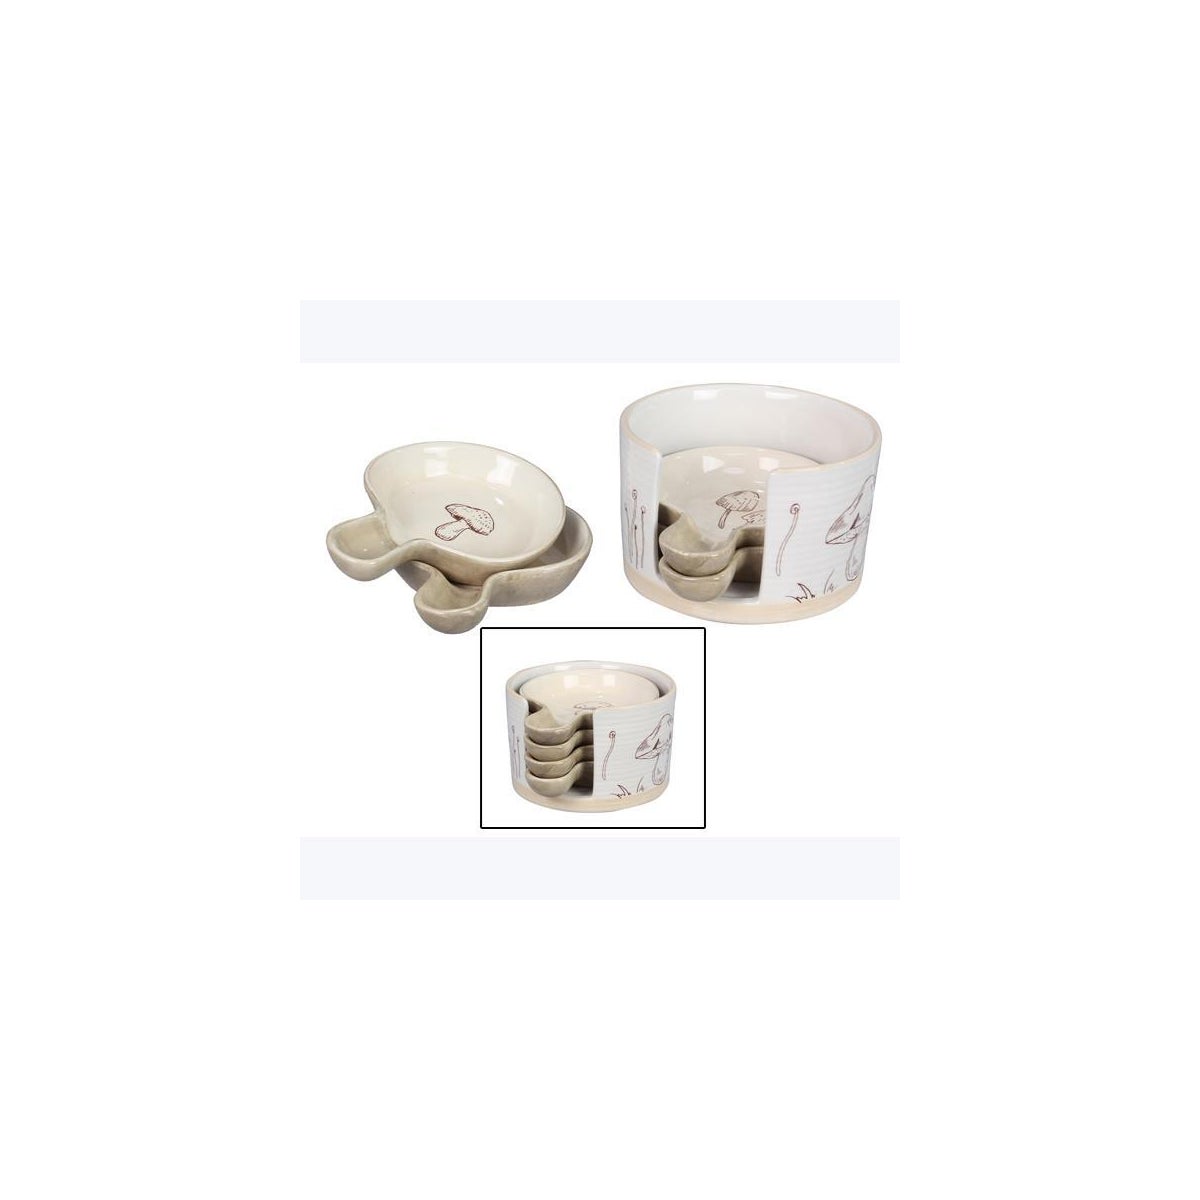 Ceramic Mushroom Shaped Snack Plates with Holder Set of 5